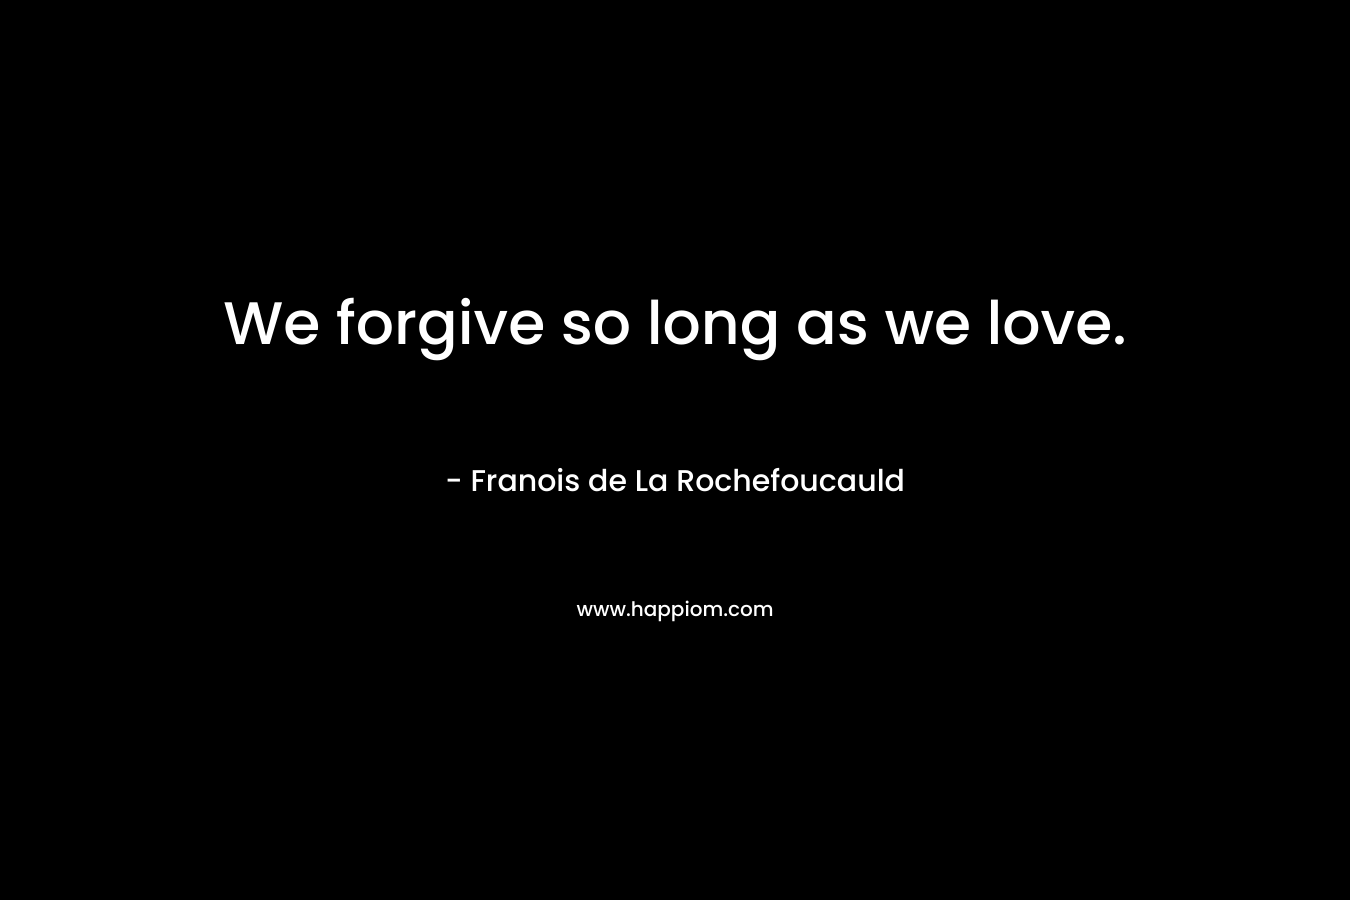 We forgive so long as we love. – Franois de La Rochefoucauld